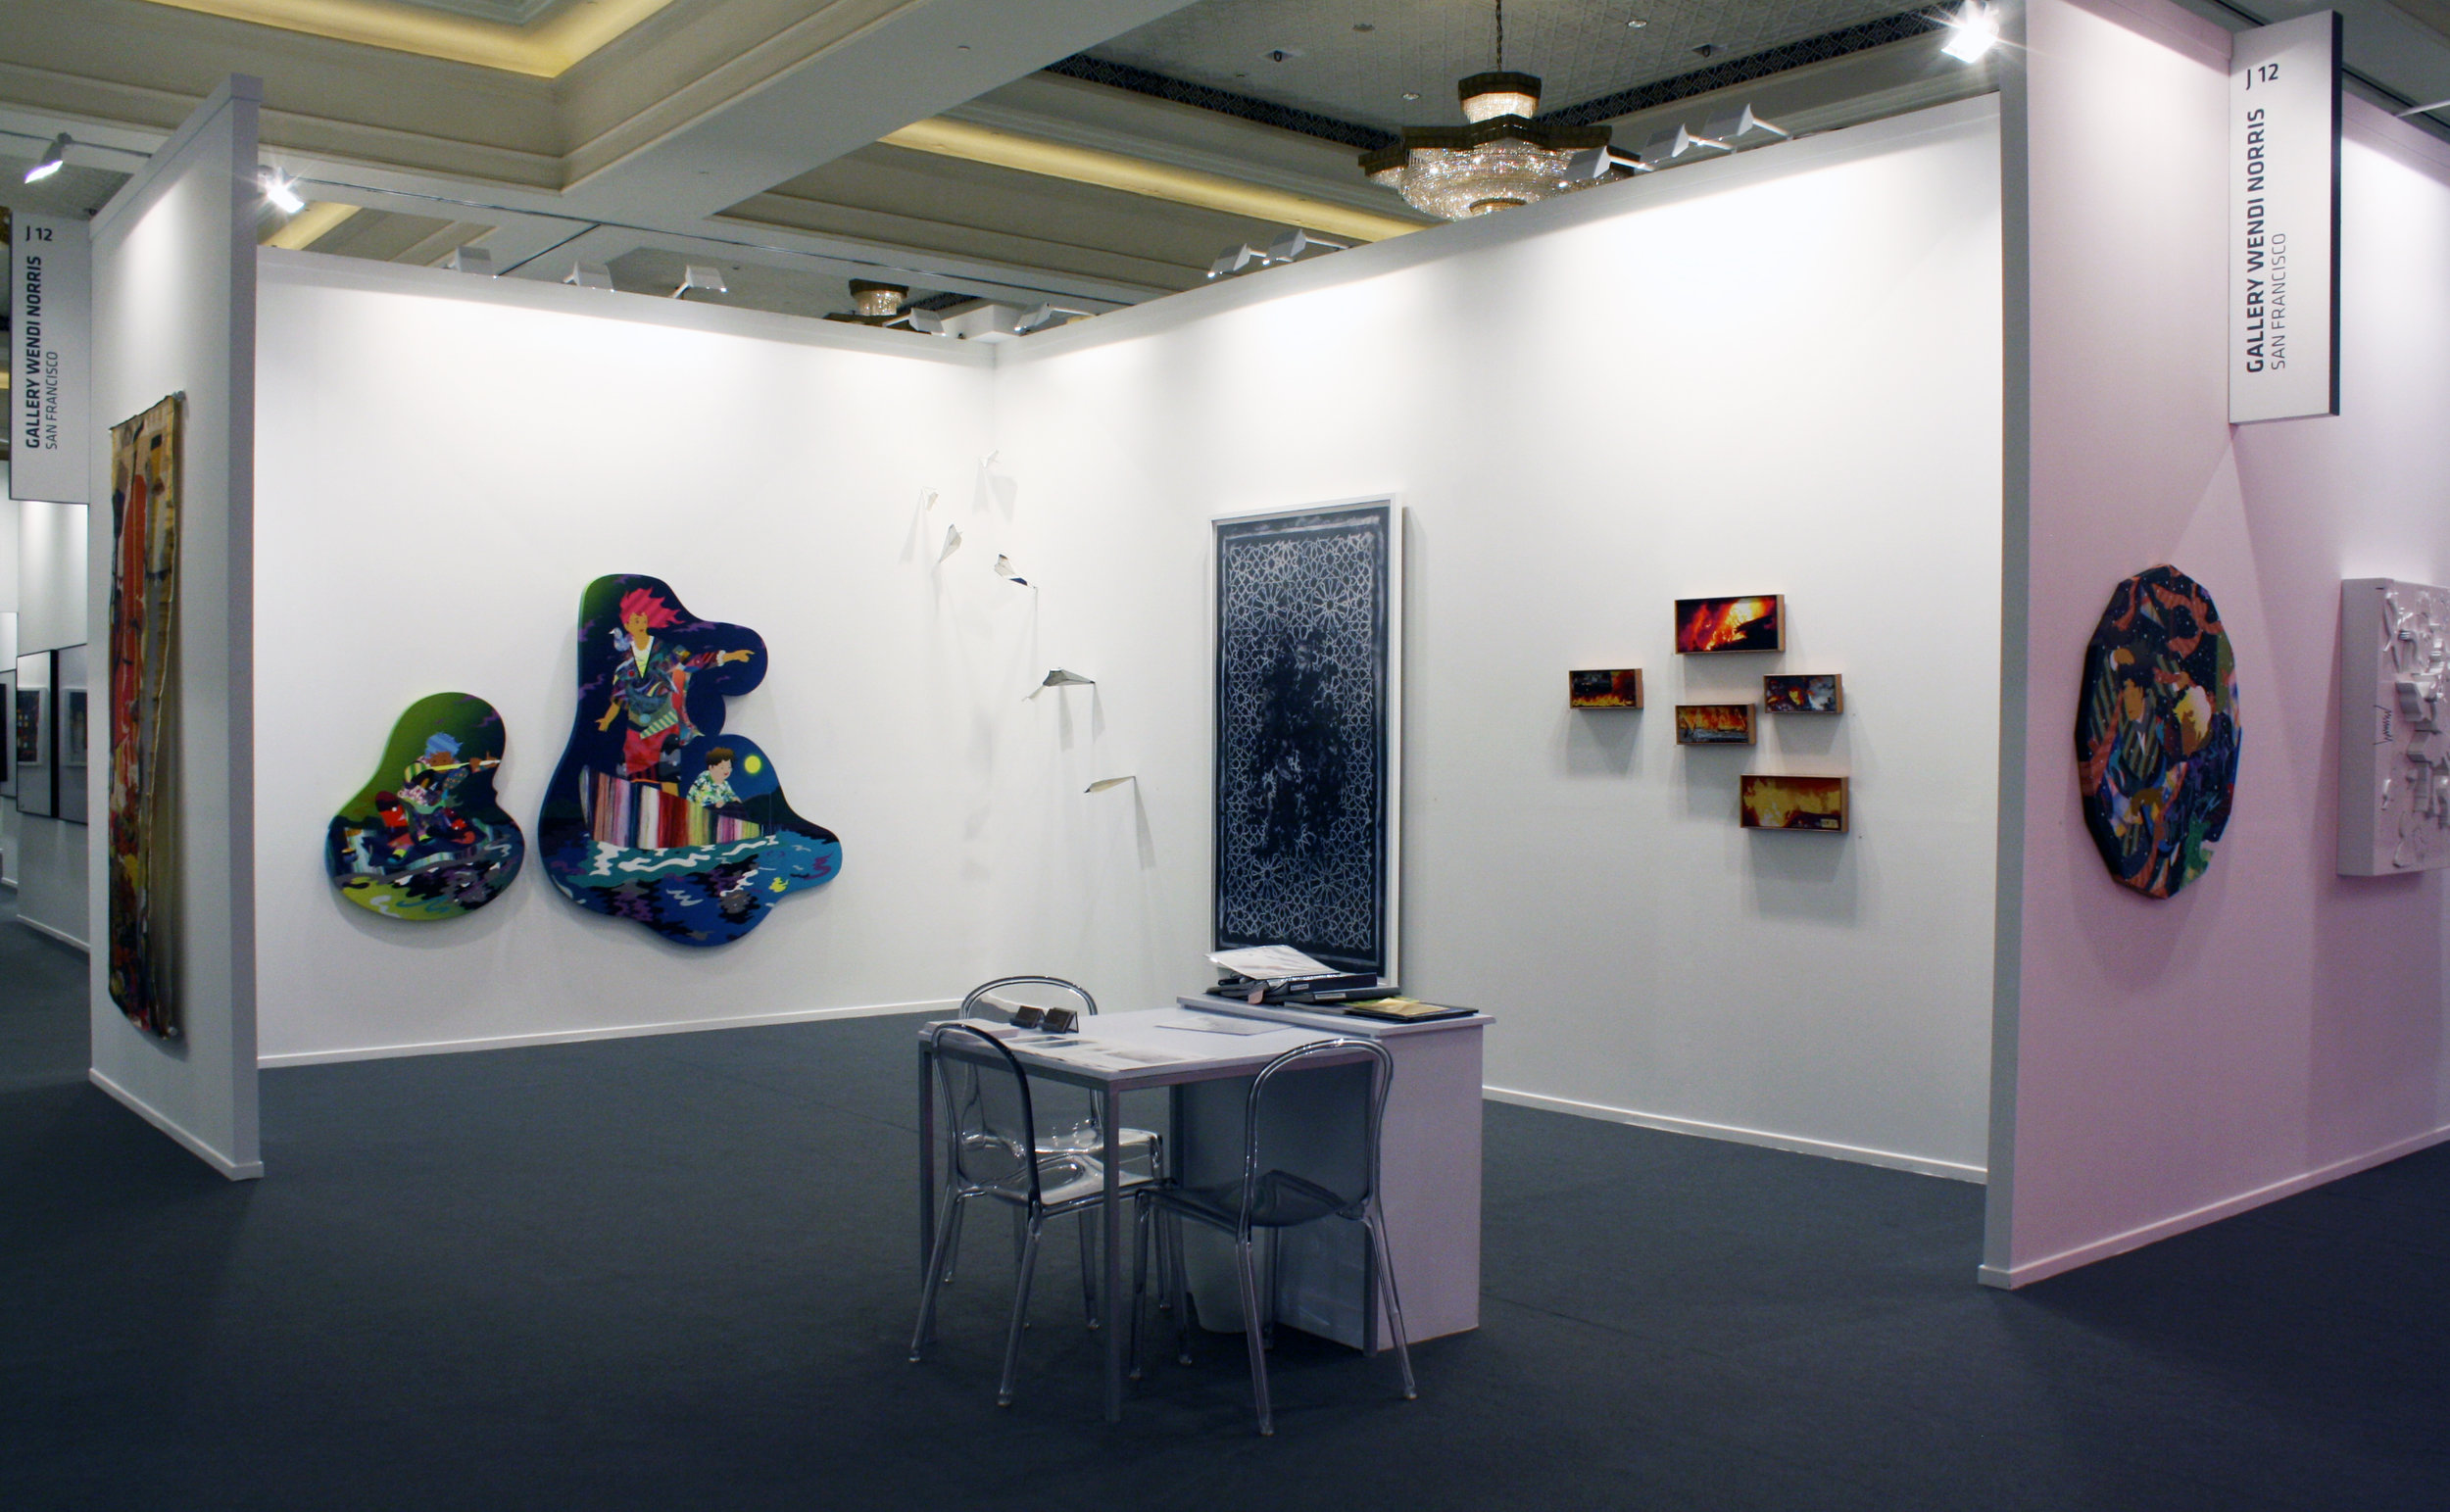   Art Dubai 2013,  Madinat Jumeirah, Dubai, United Arab Emirates, Booth J12, March 20 – March 23, 2013 